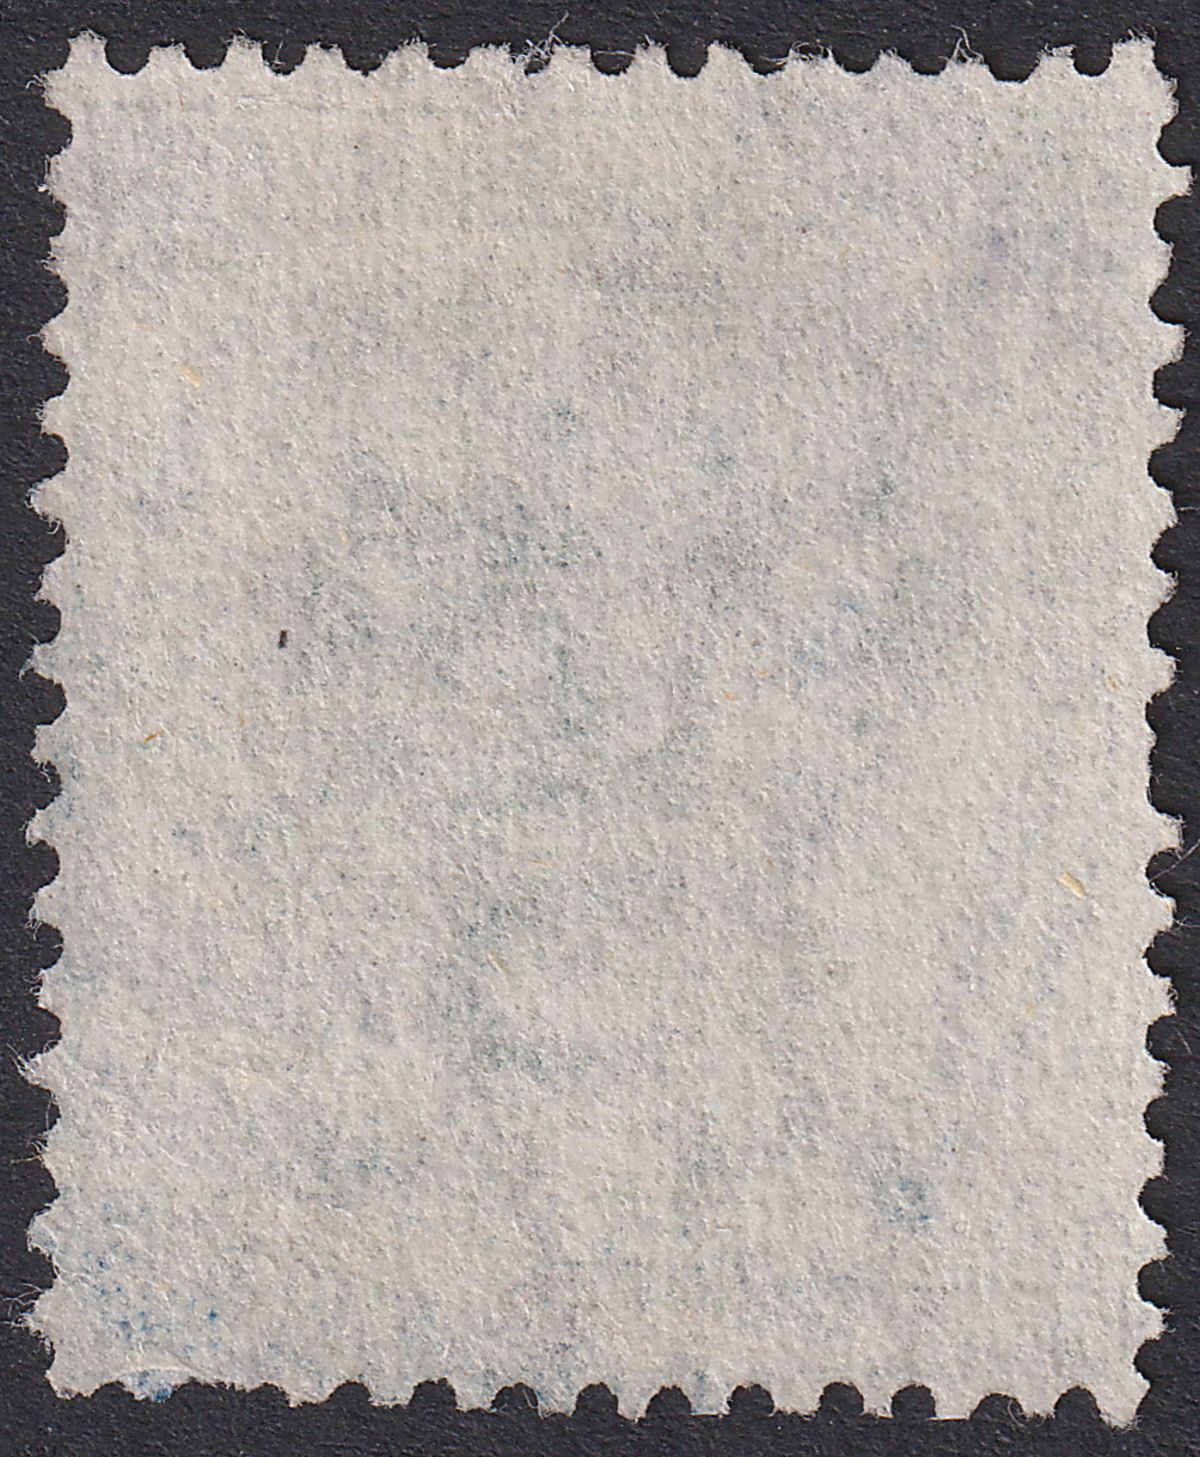 Hong Kong 1865 QV 24c Green Used w Yokohama Y1 postmark in Blue SG Z38 PO Japan